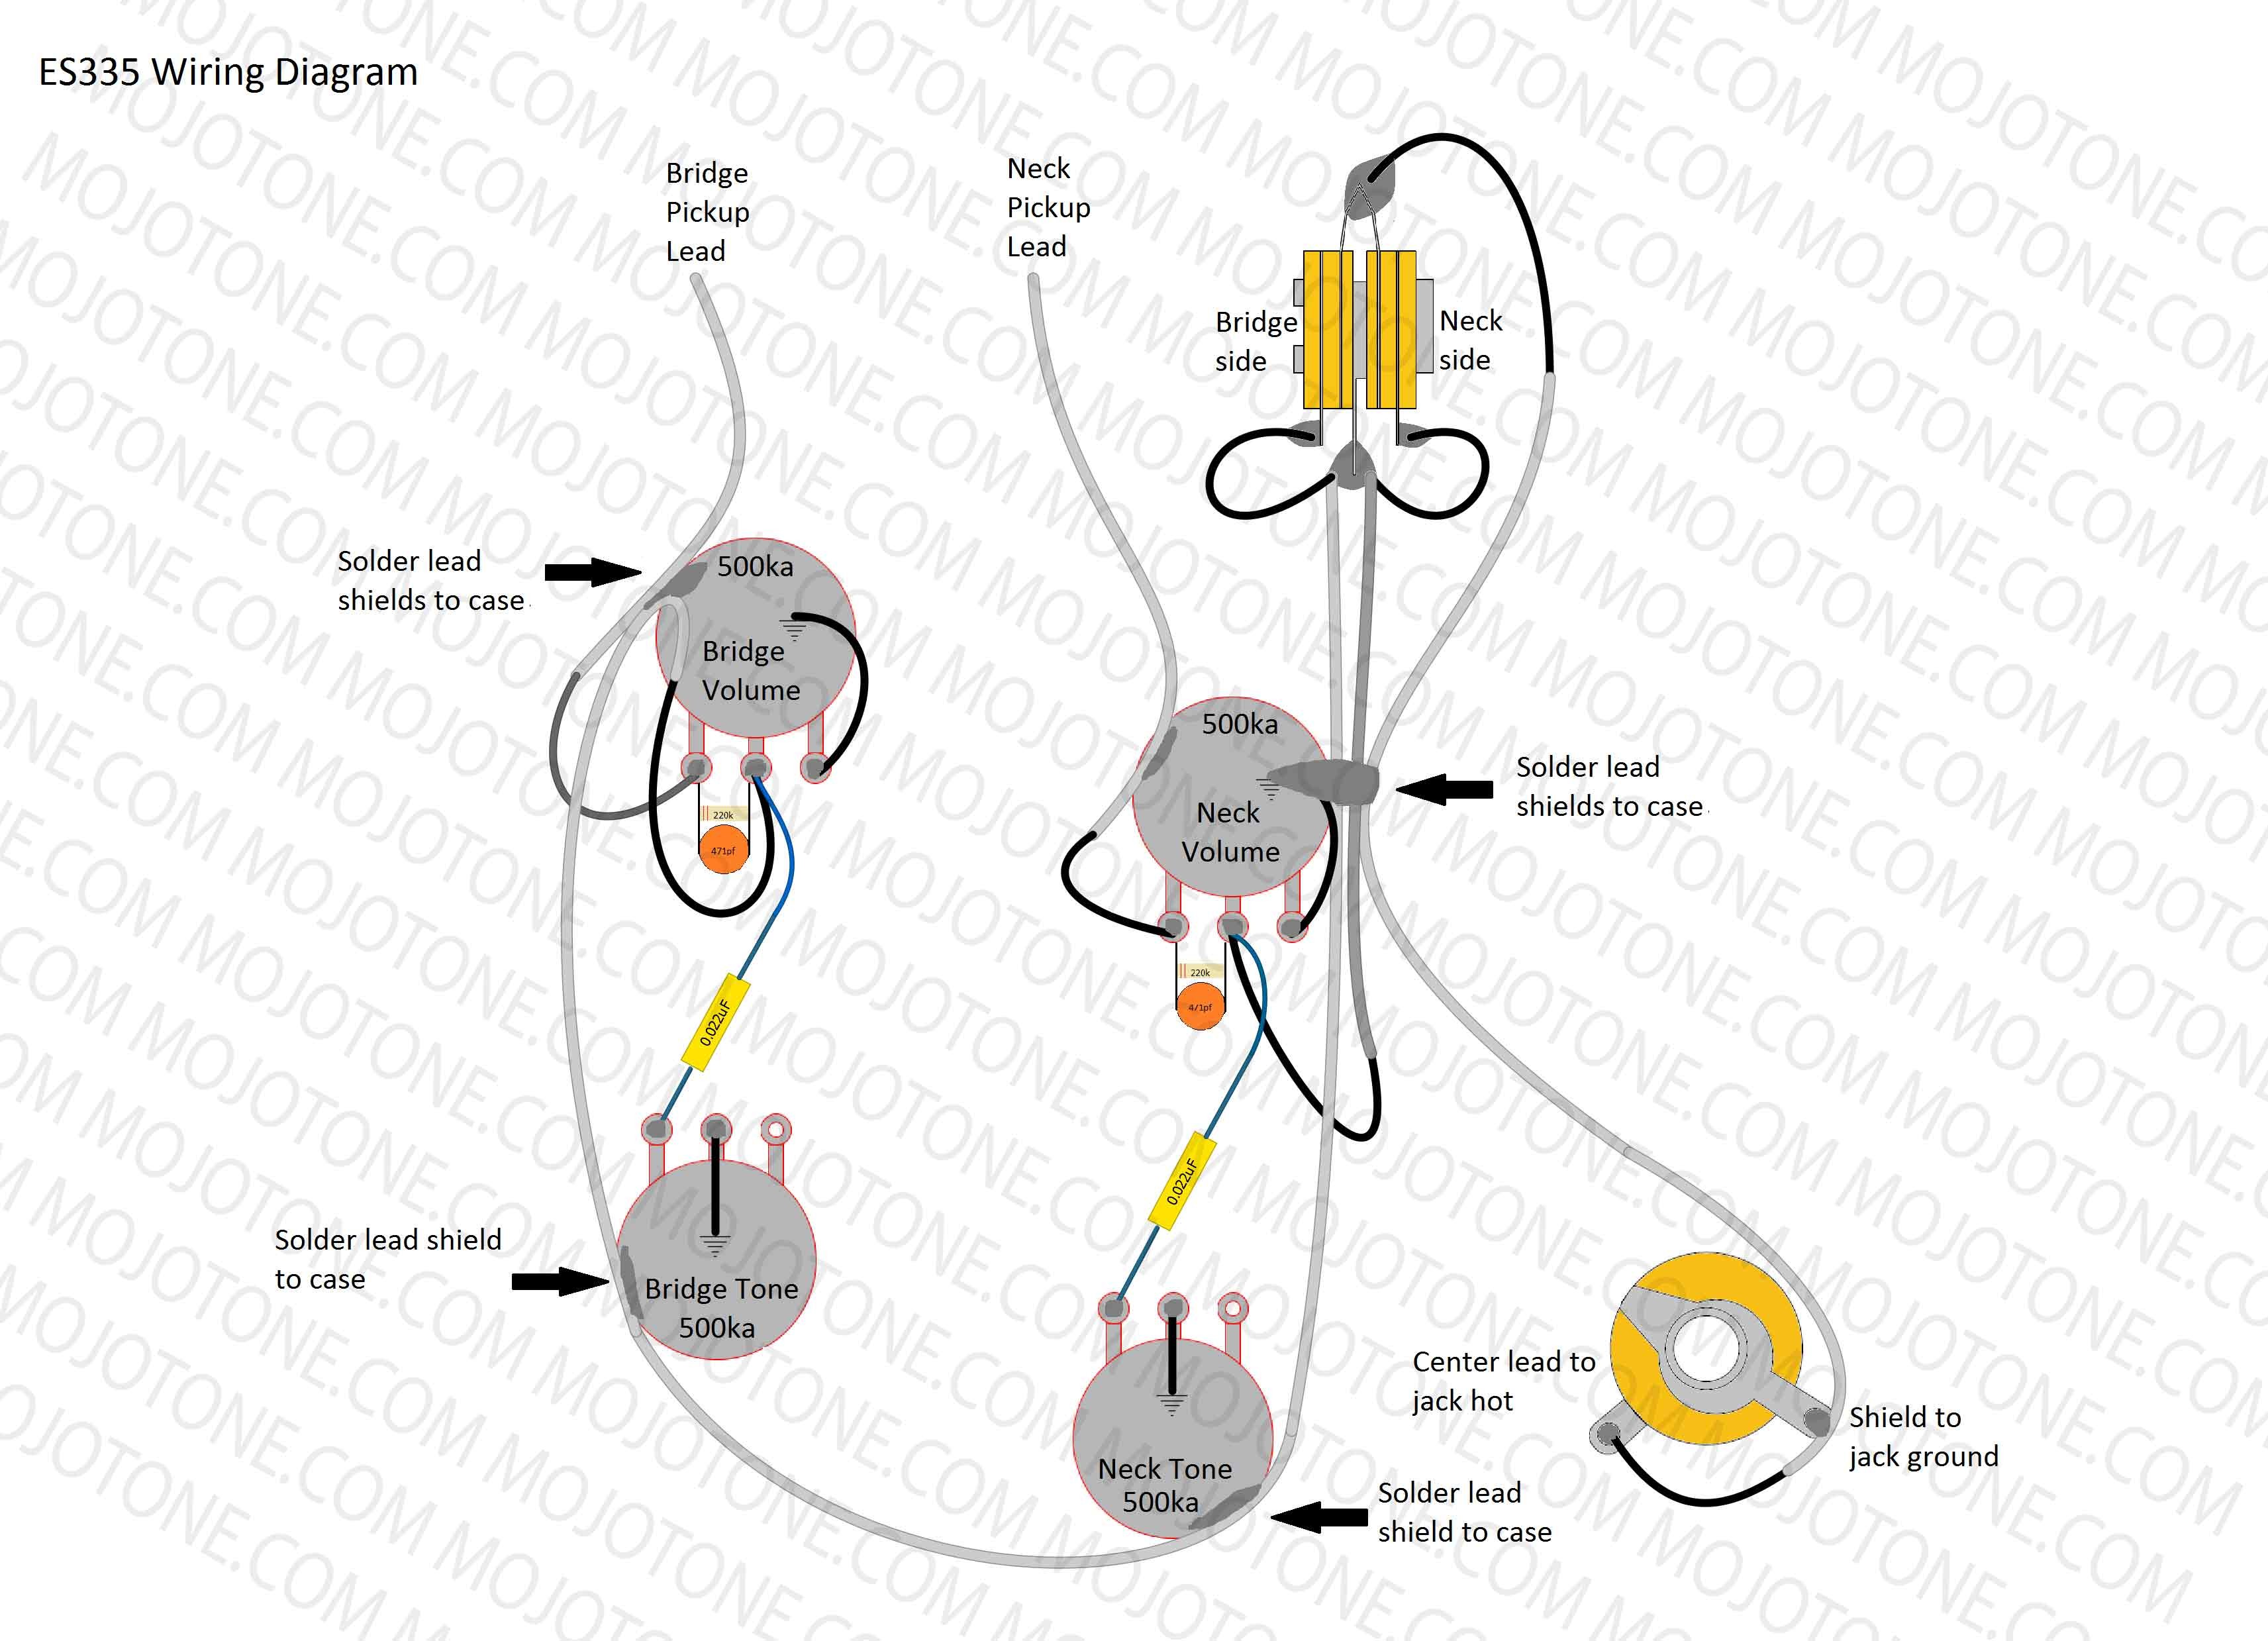 wiring diagram for es 335 wiring diagram mega 335 three way wiring diagram wiring diagram for